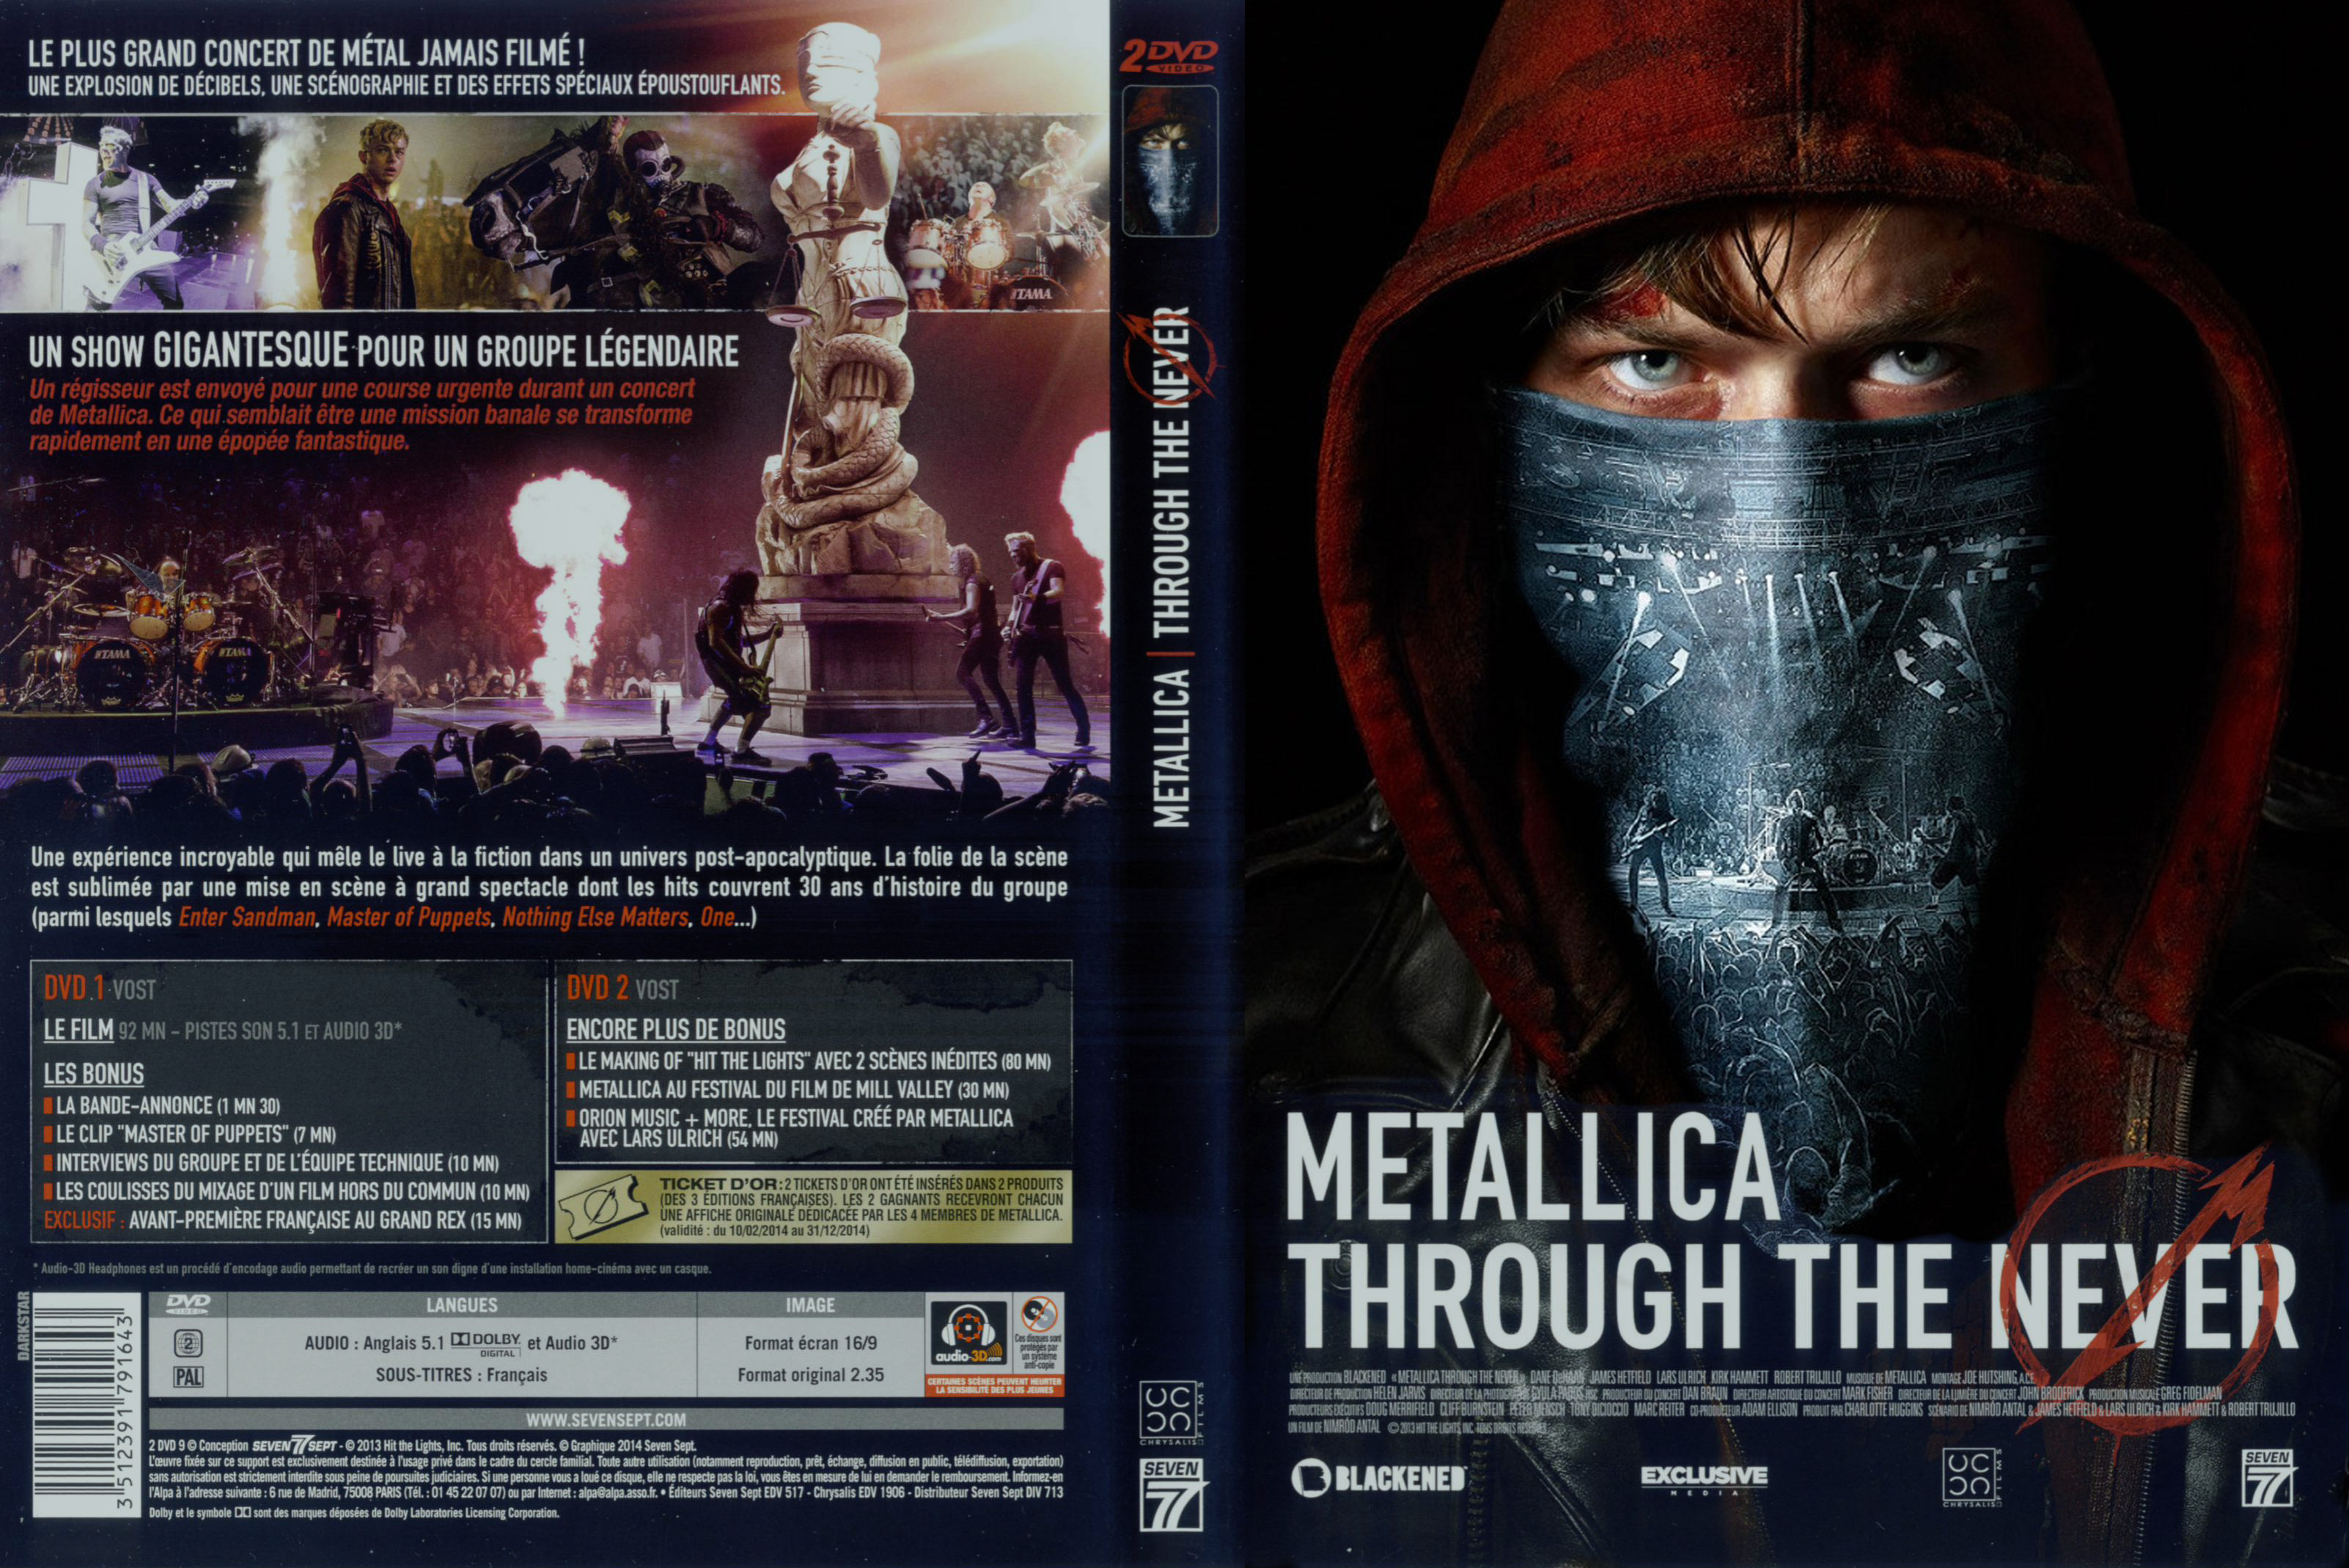 Jaquette DVD Metallica Through the Never